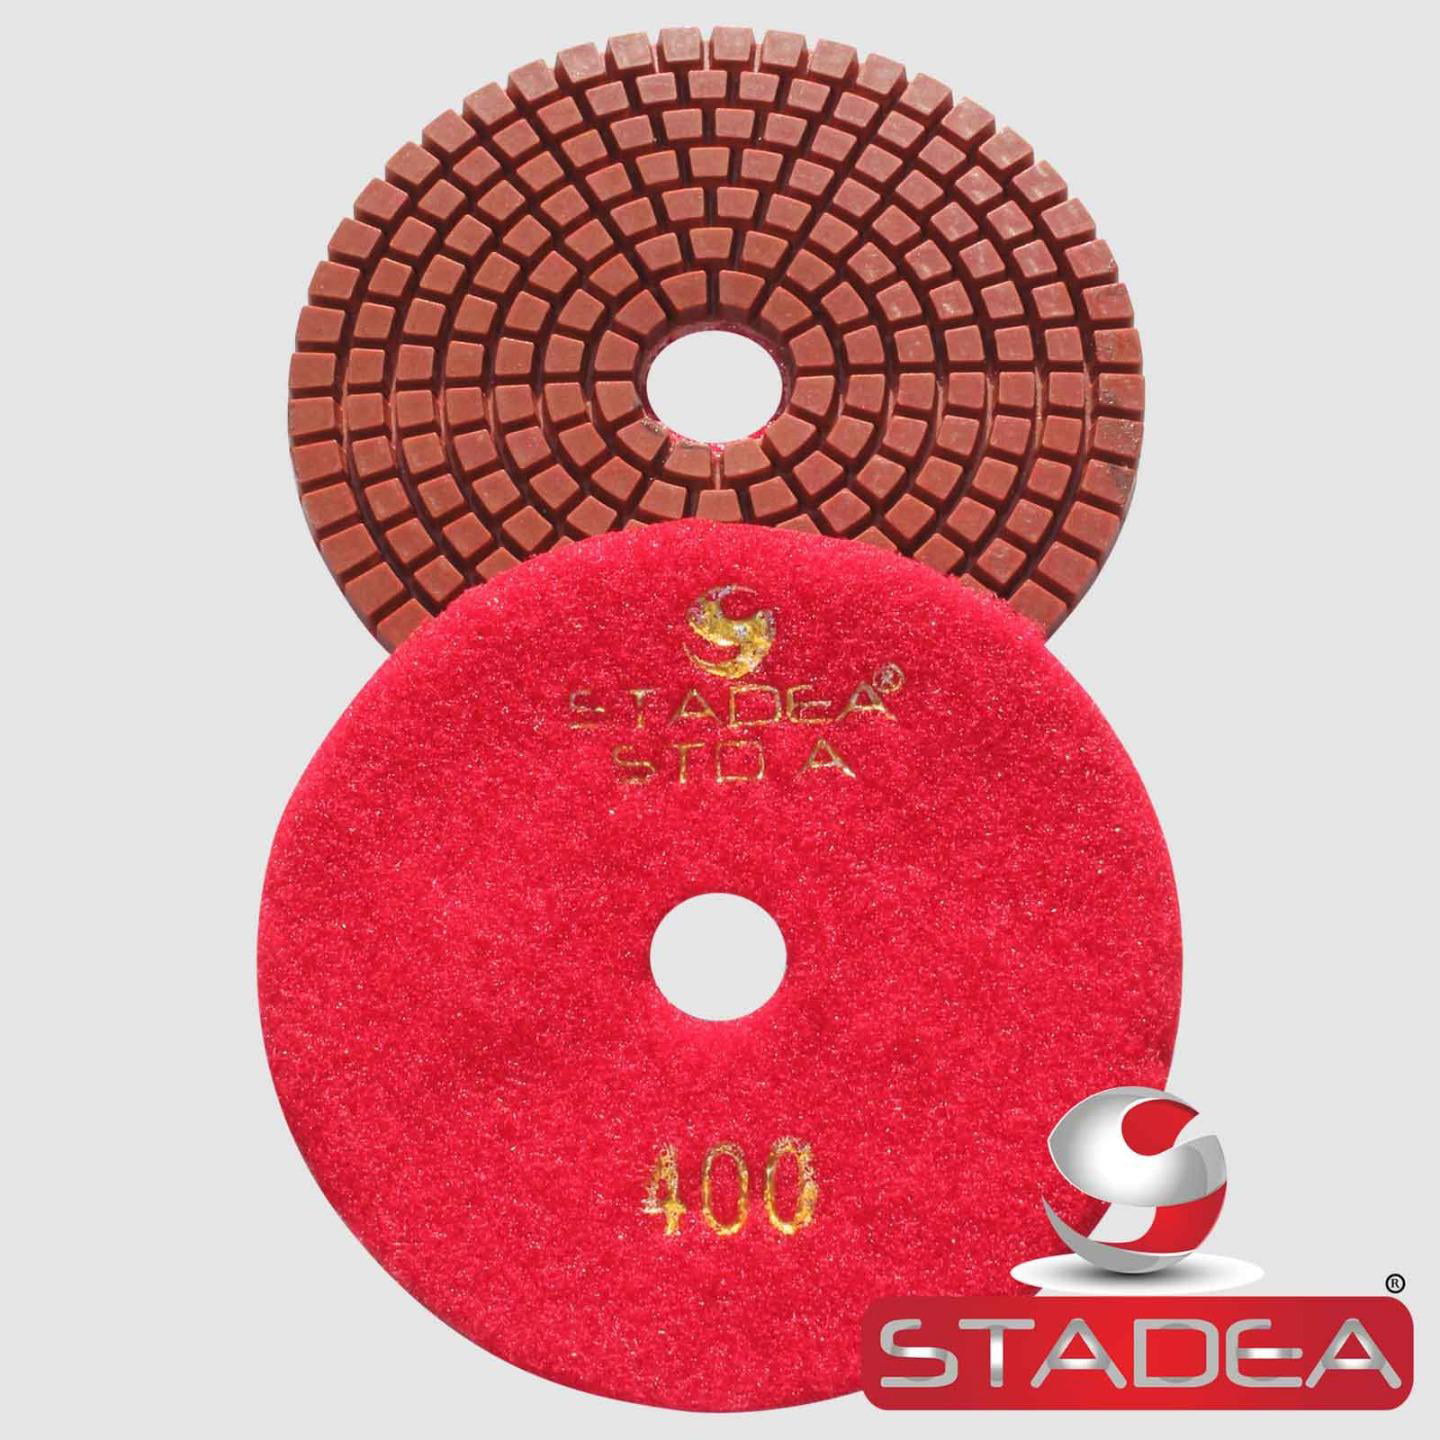 STADEA 5" Diamond Polishing Pad Grit 400 for Granite Concrete Wet Grinder Floor 